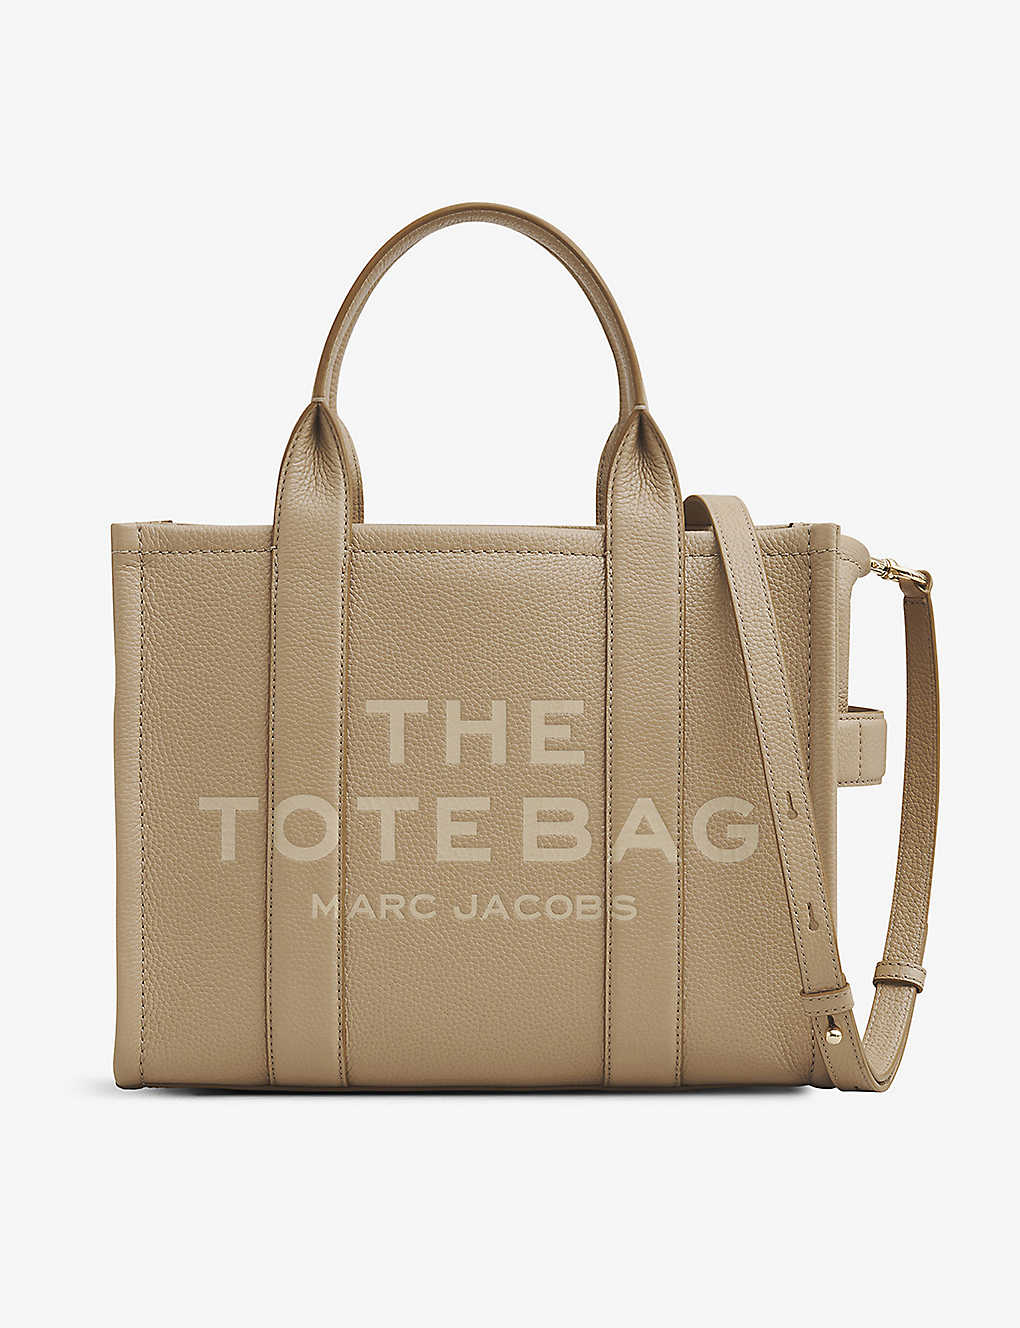 The Tote medium leather tote bag